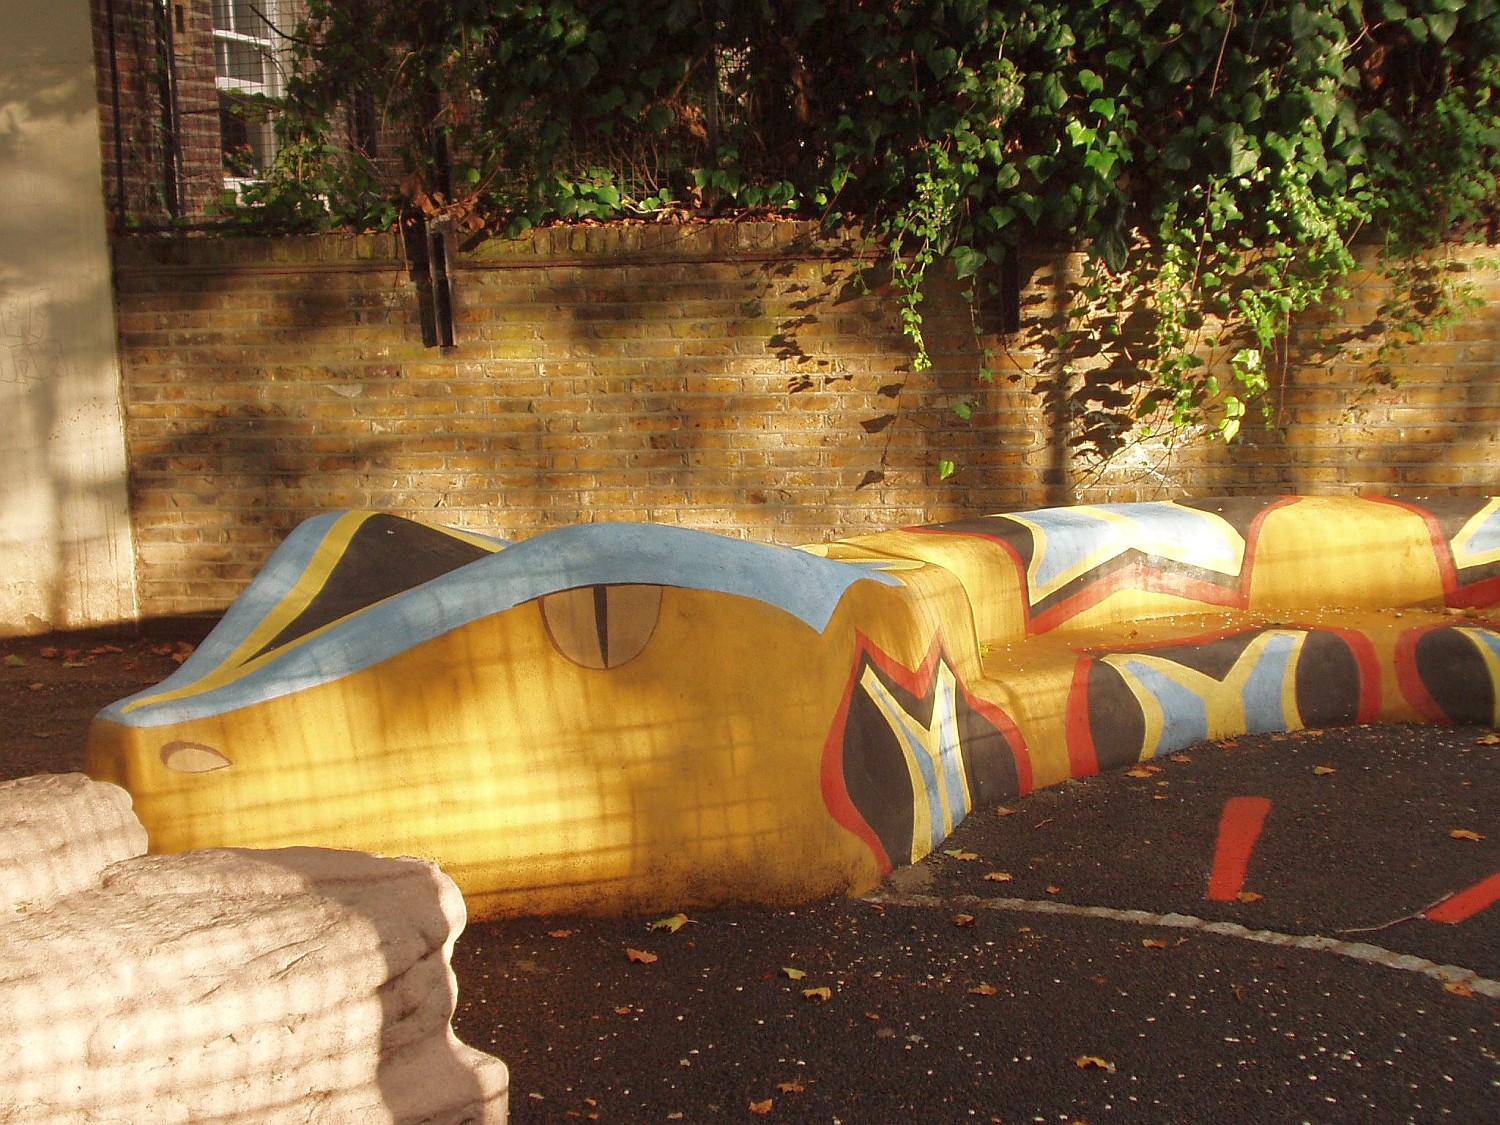 Snake playground, Highgate, London, with Groundwork London